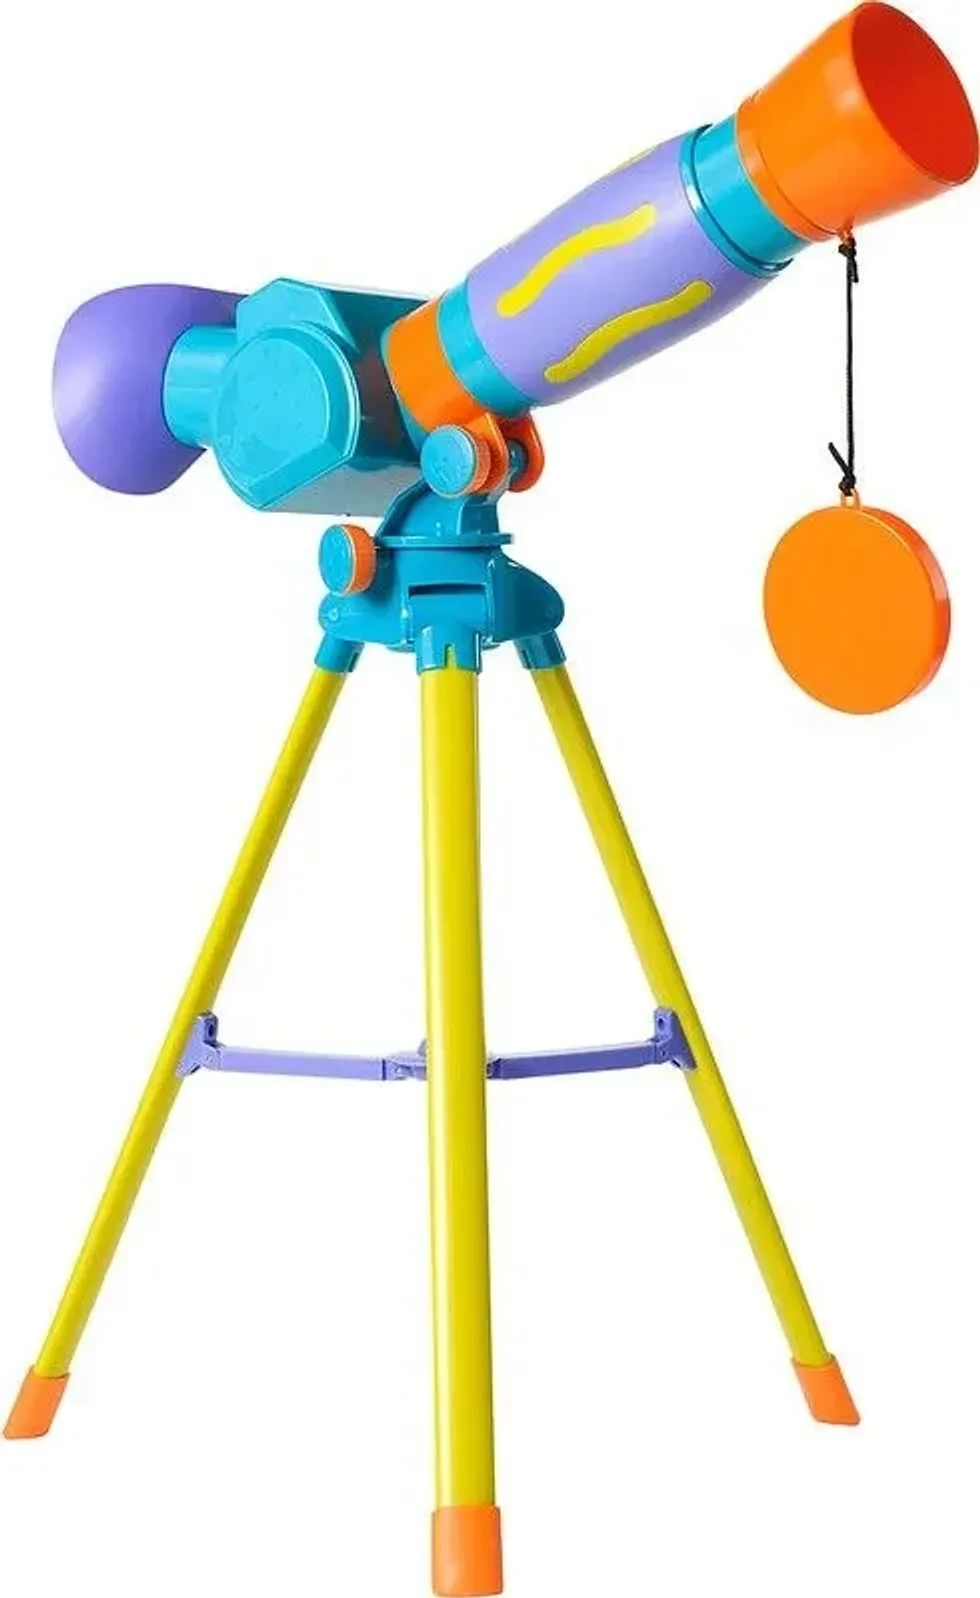 Geosafari Jr My First Telescope.